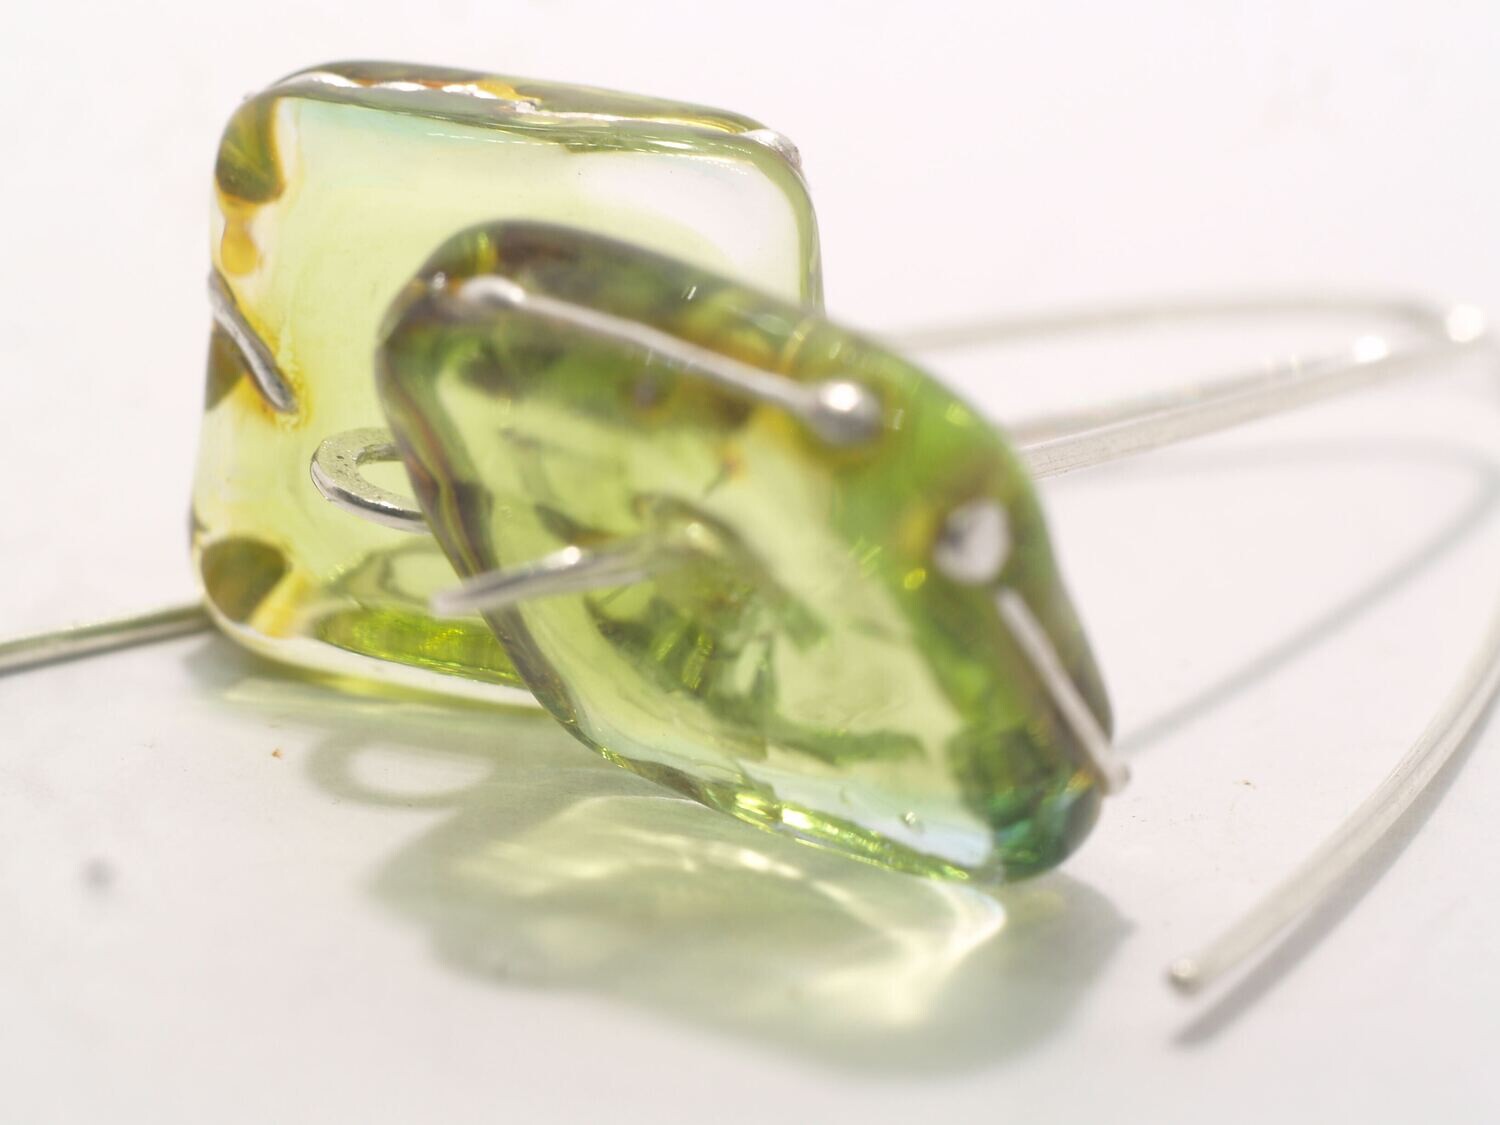 emubead earrings in slices of green + Ag